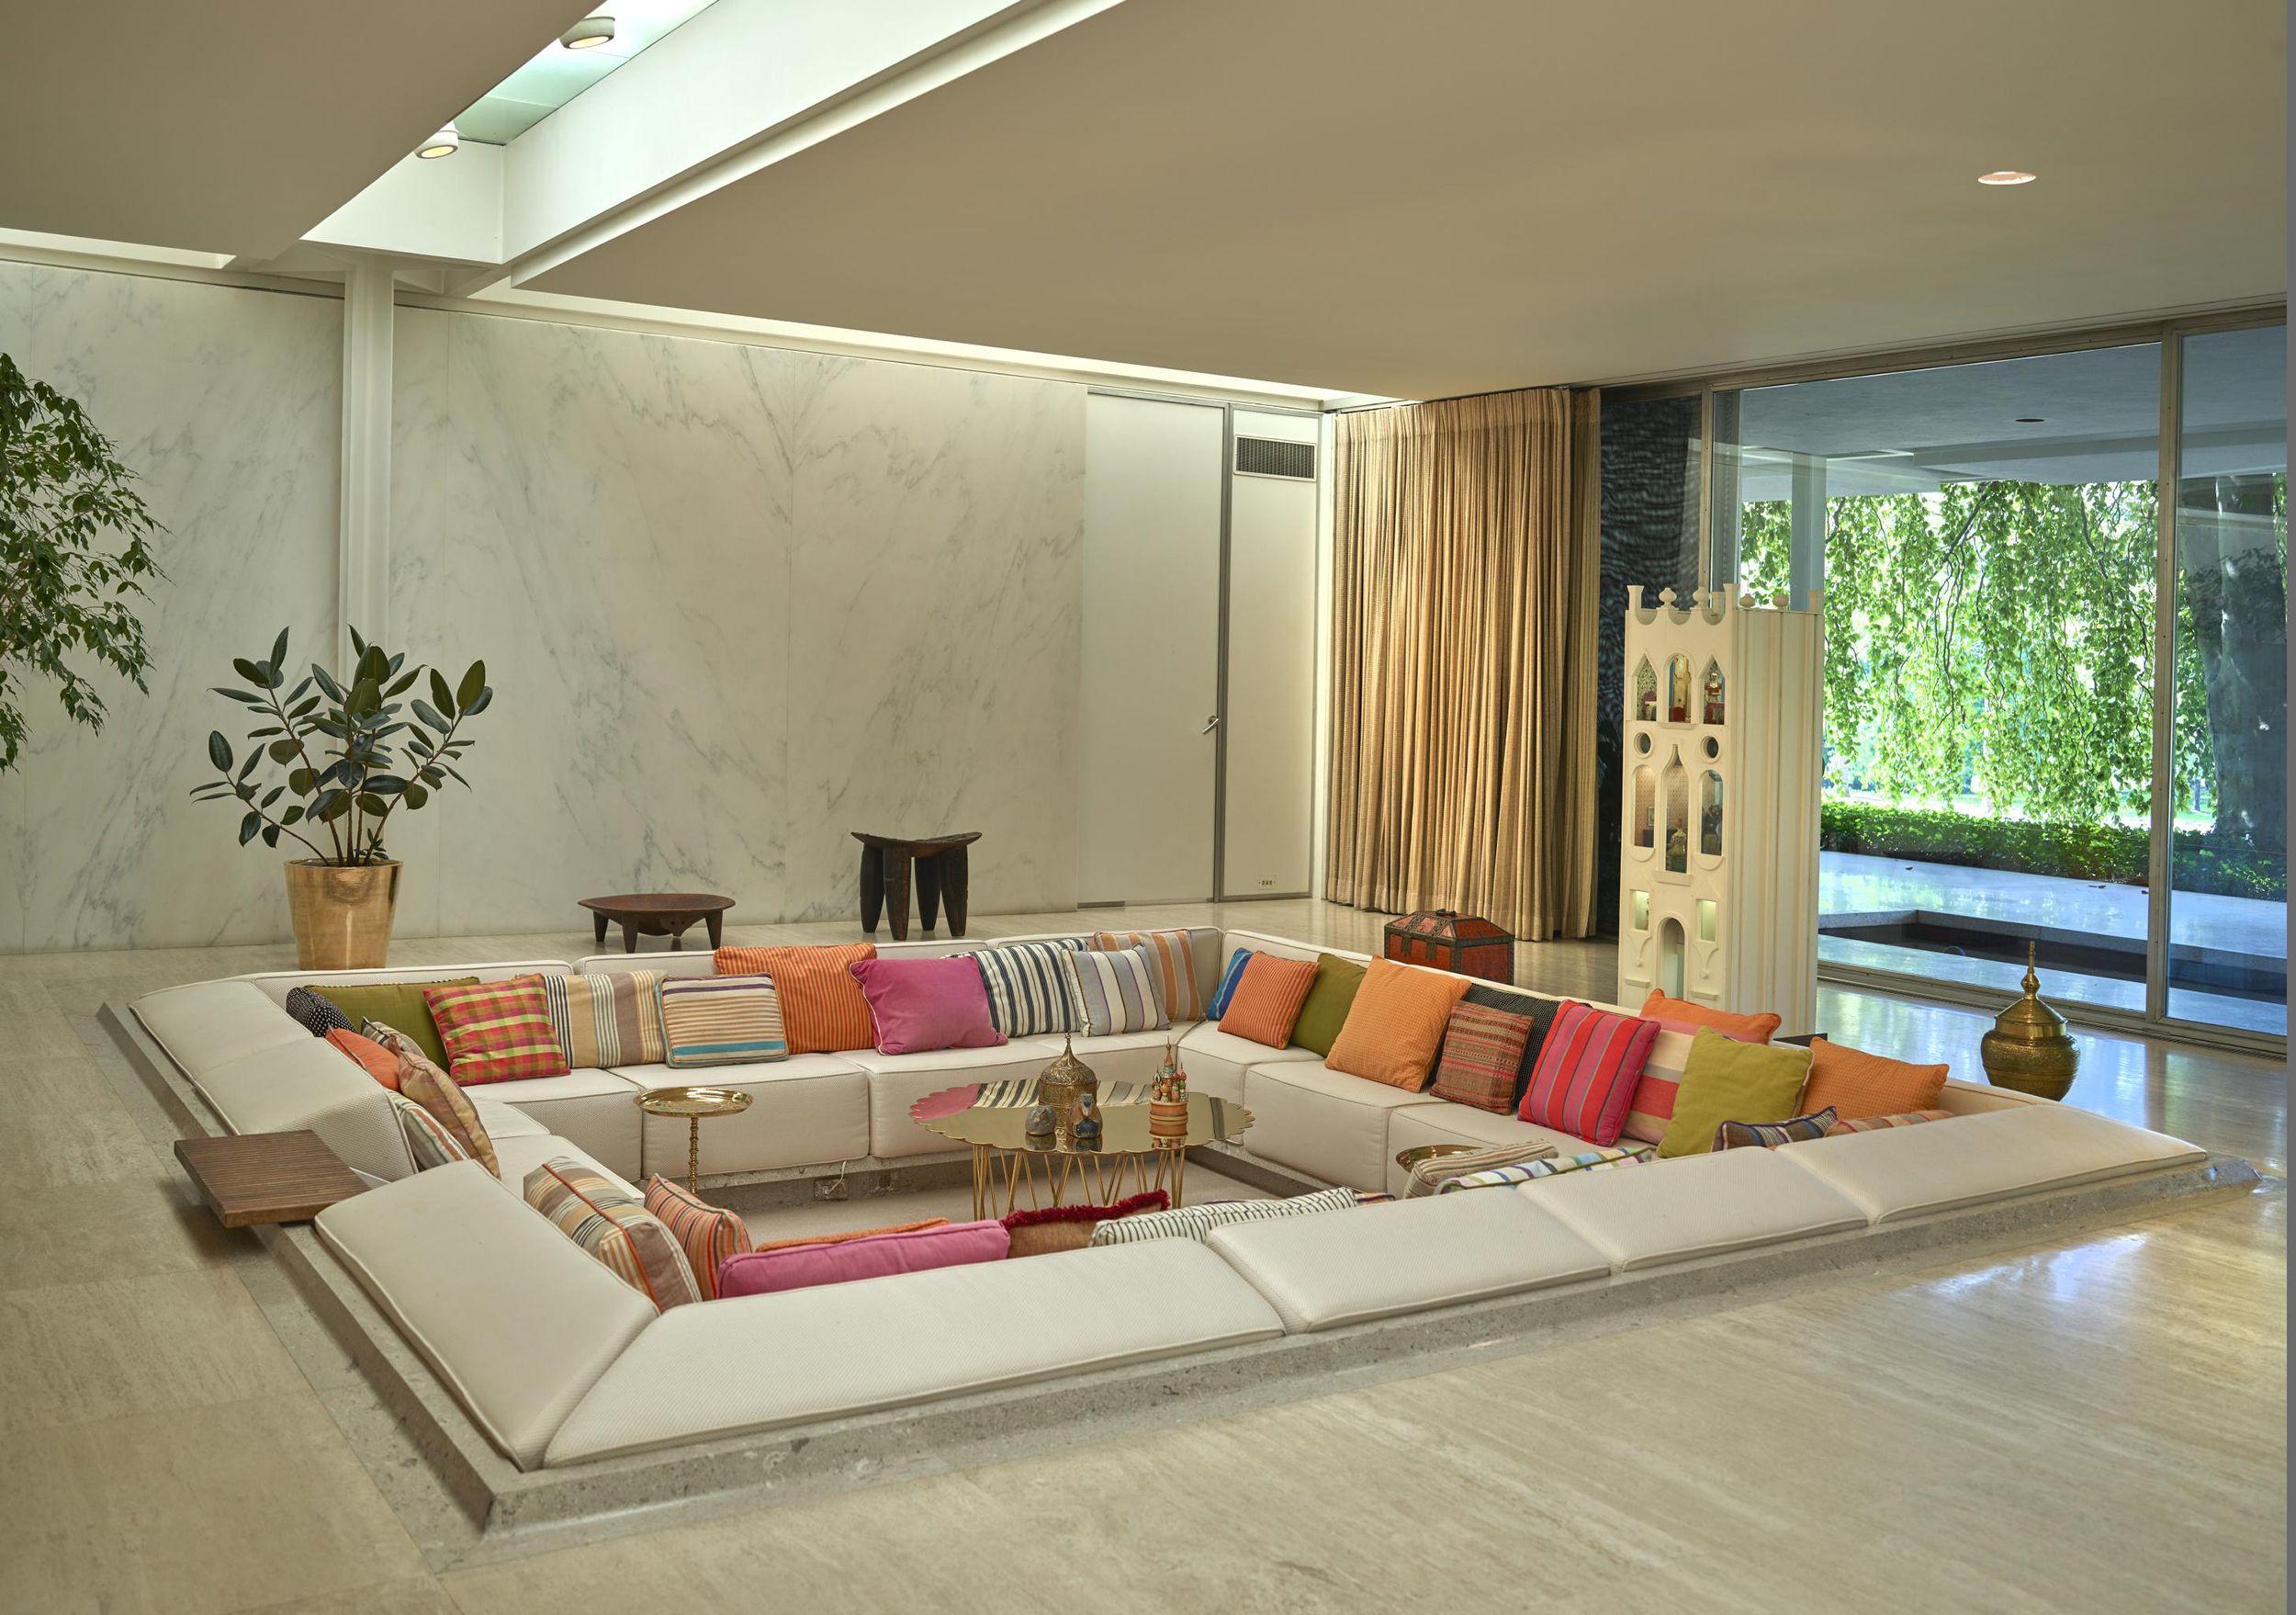 15 Best Sunken Living Room Design Ideas for Your Home